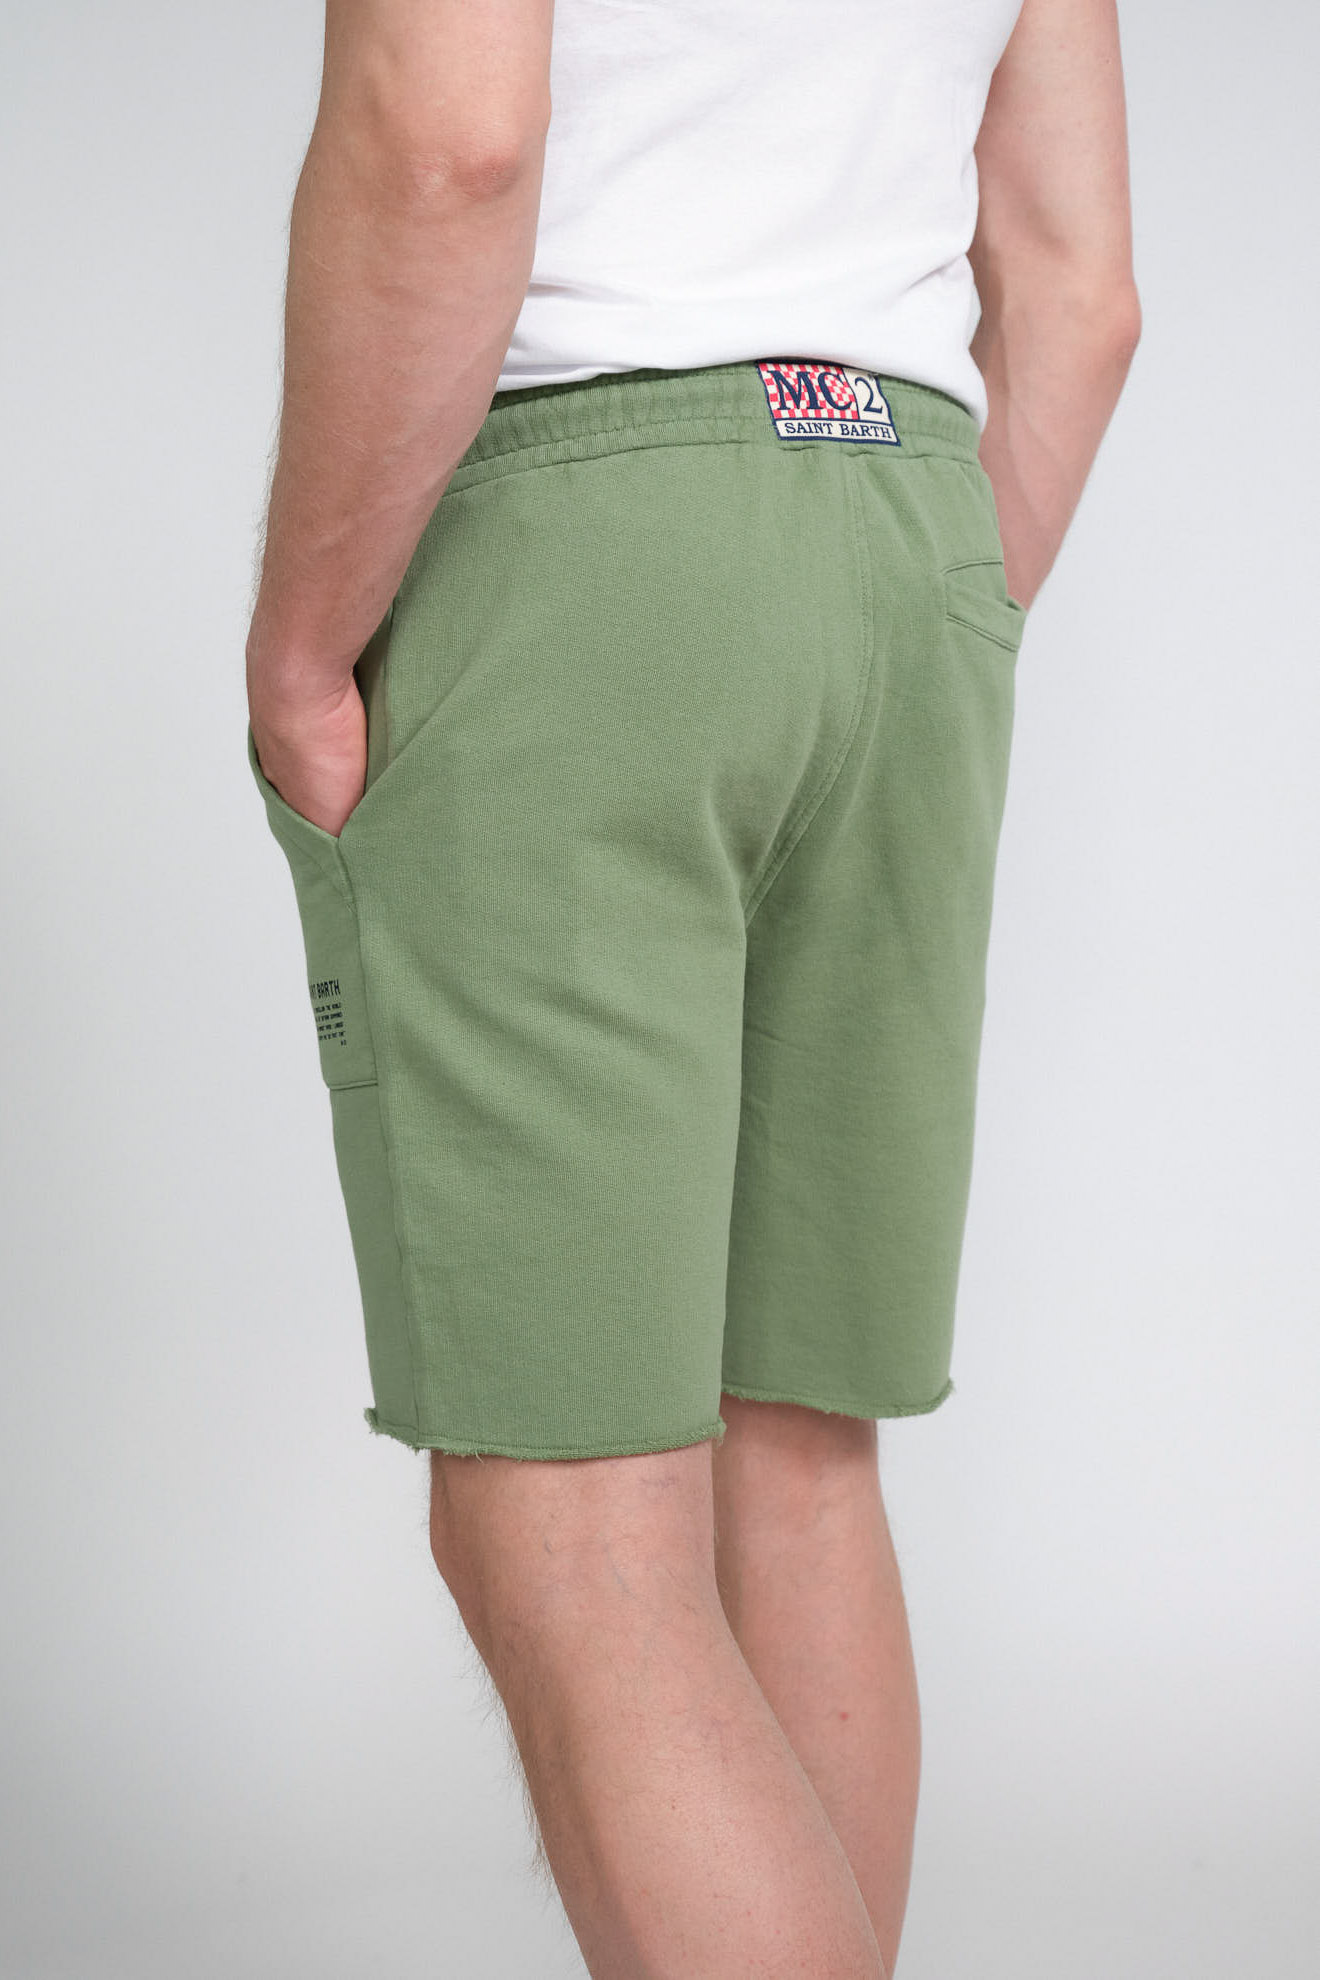 st.barth shorts green branded cotton model back